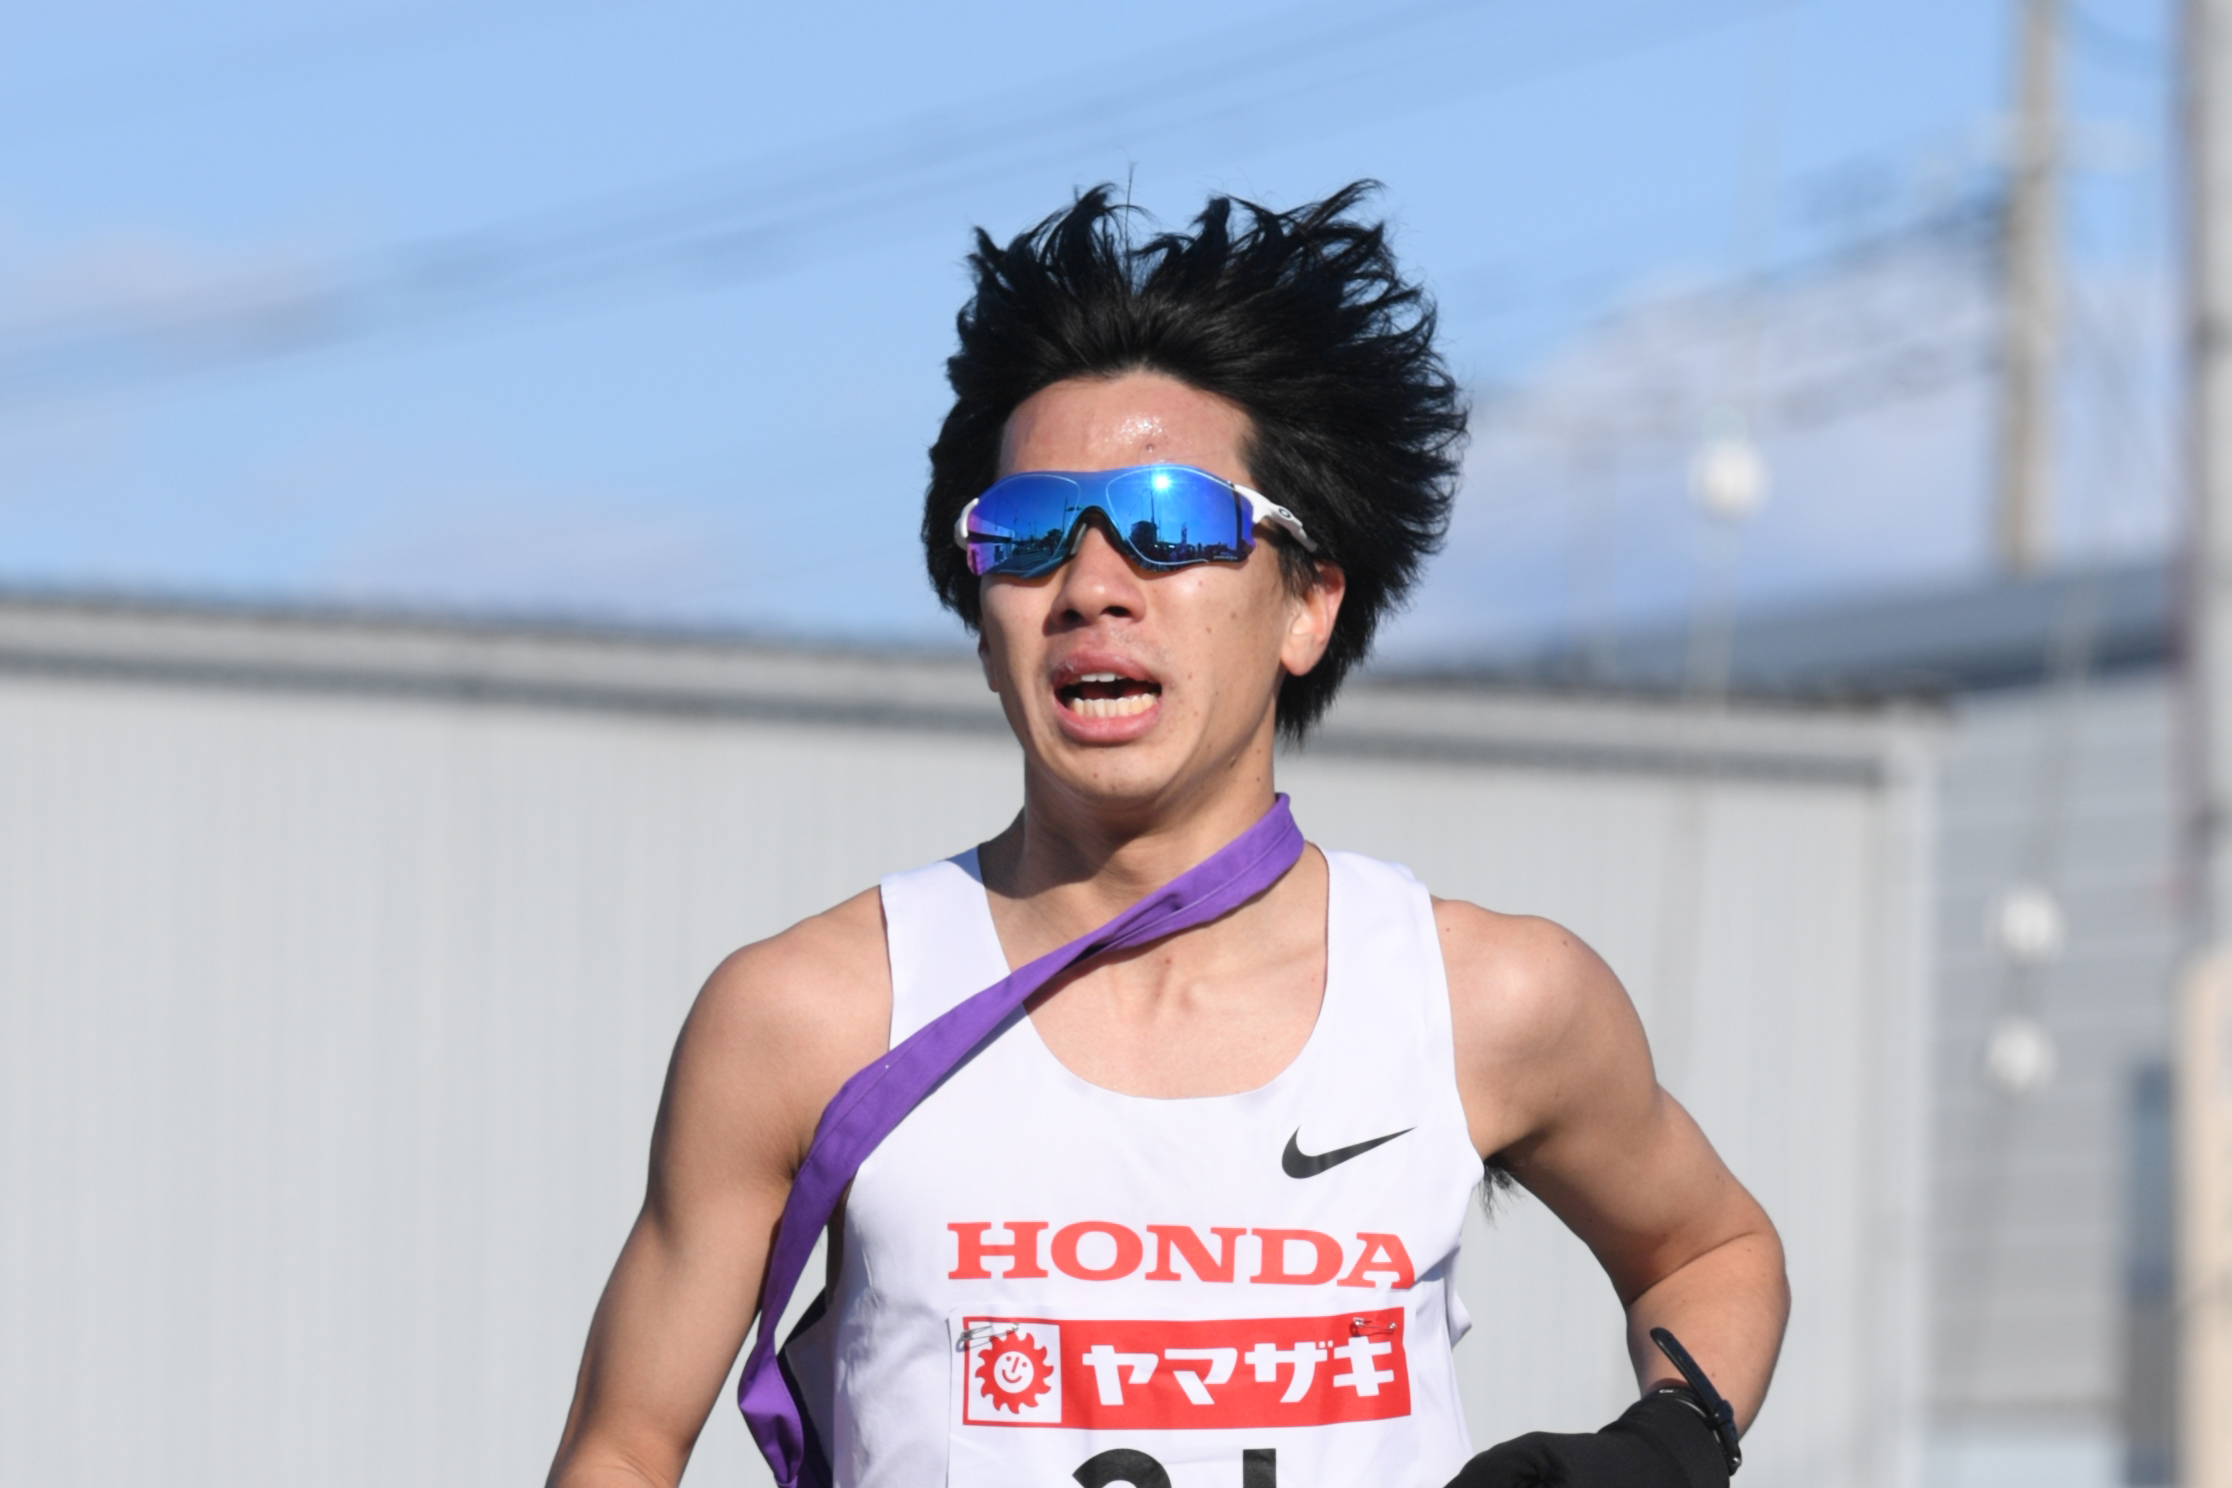 Hondaの山中秀仁が現役引退 14年の学生ハーフマラソン優勝